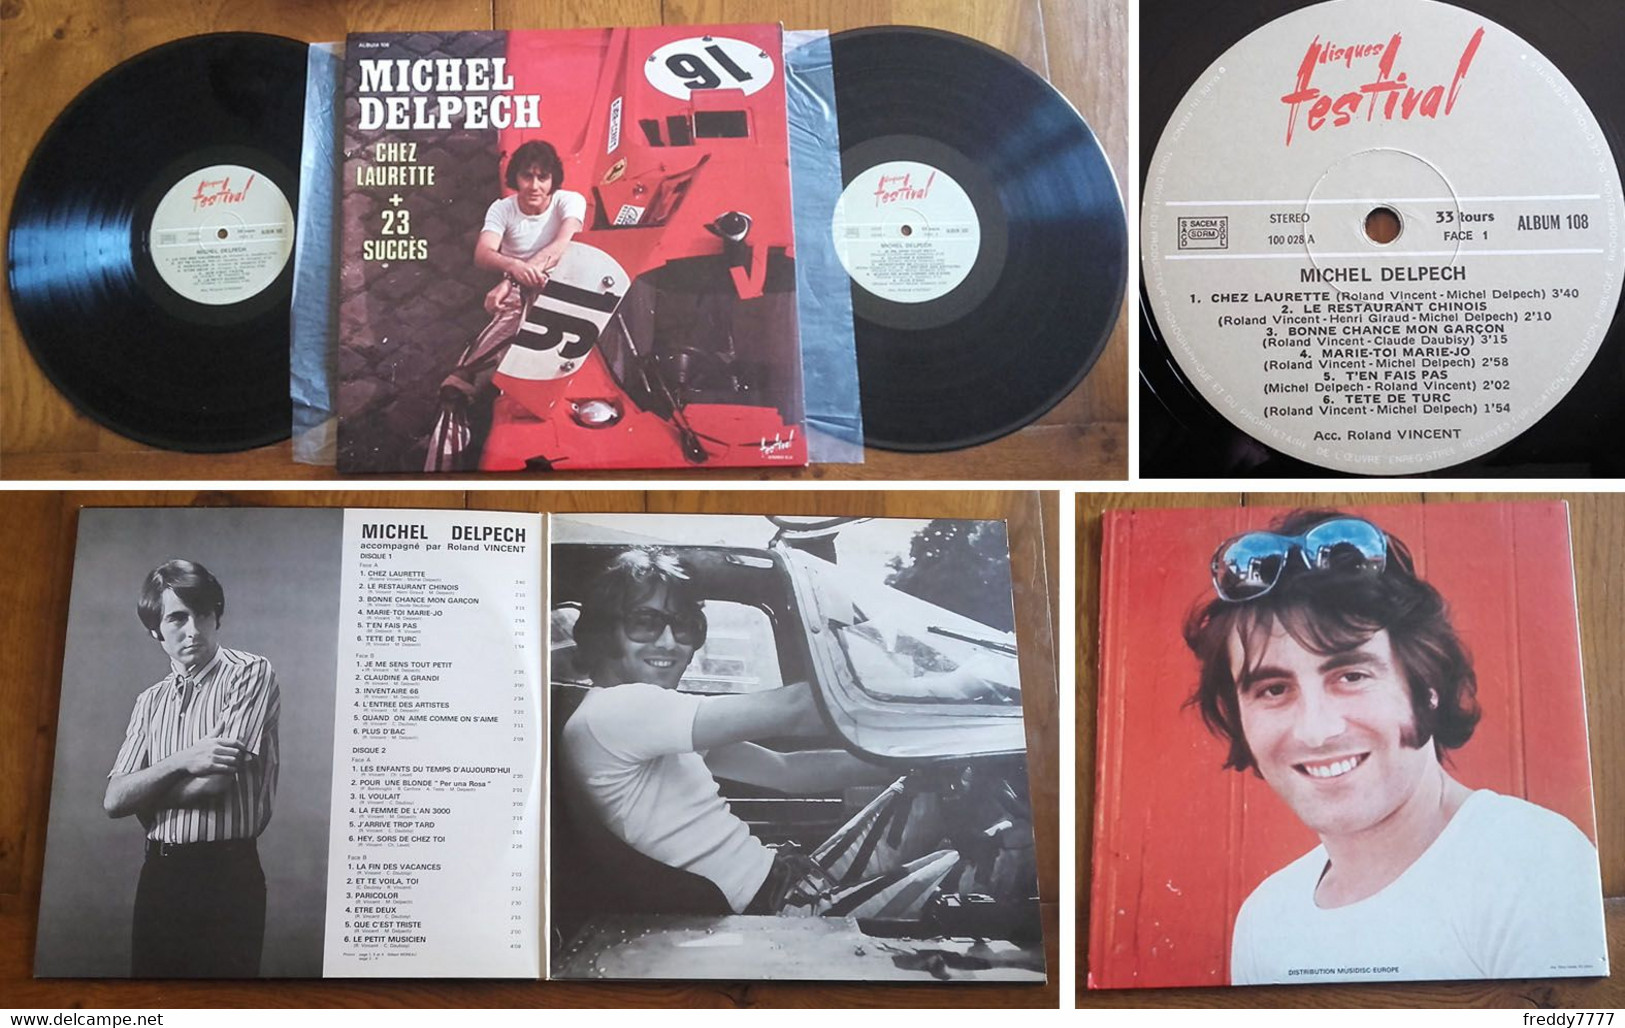 RARE French DOUBLE LP 33t RPM (12") MICHEL DELPECH (Gatefold P/s, 1974) - Ediciones De Colección